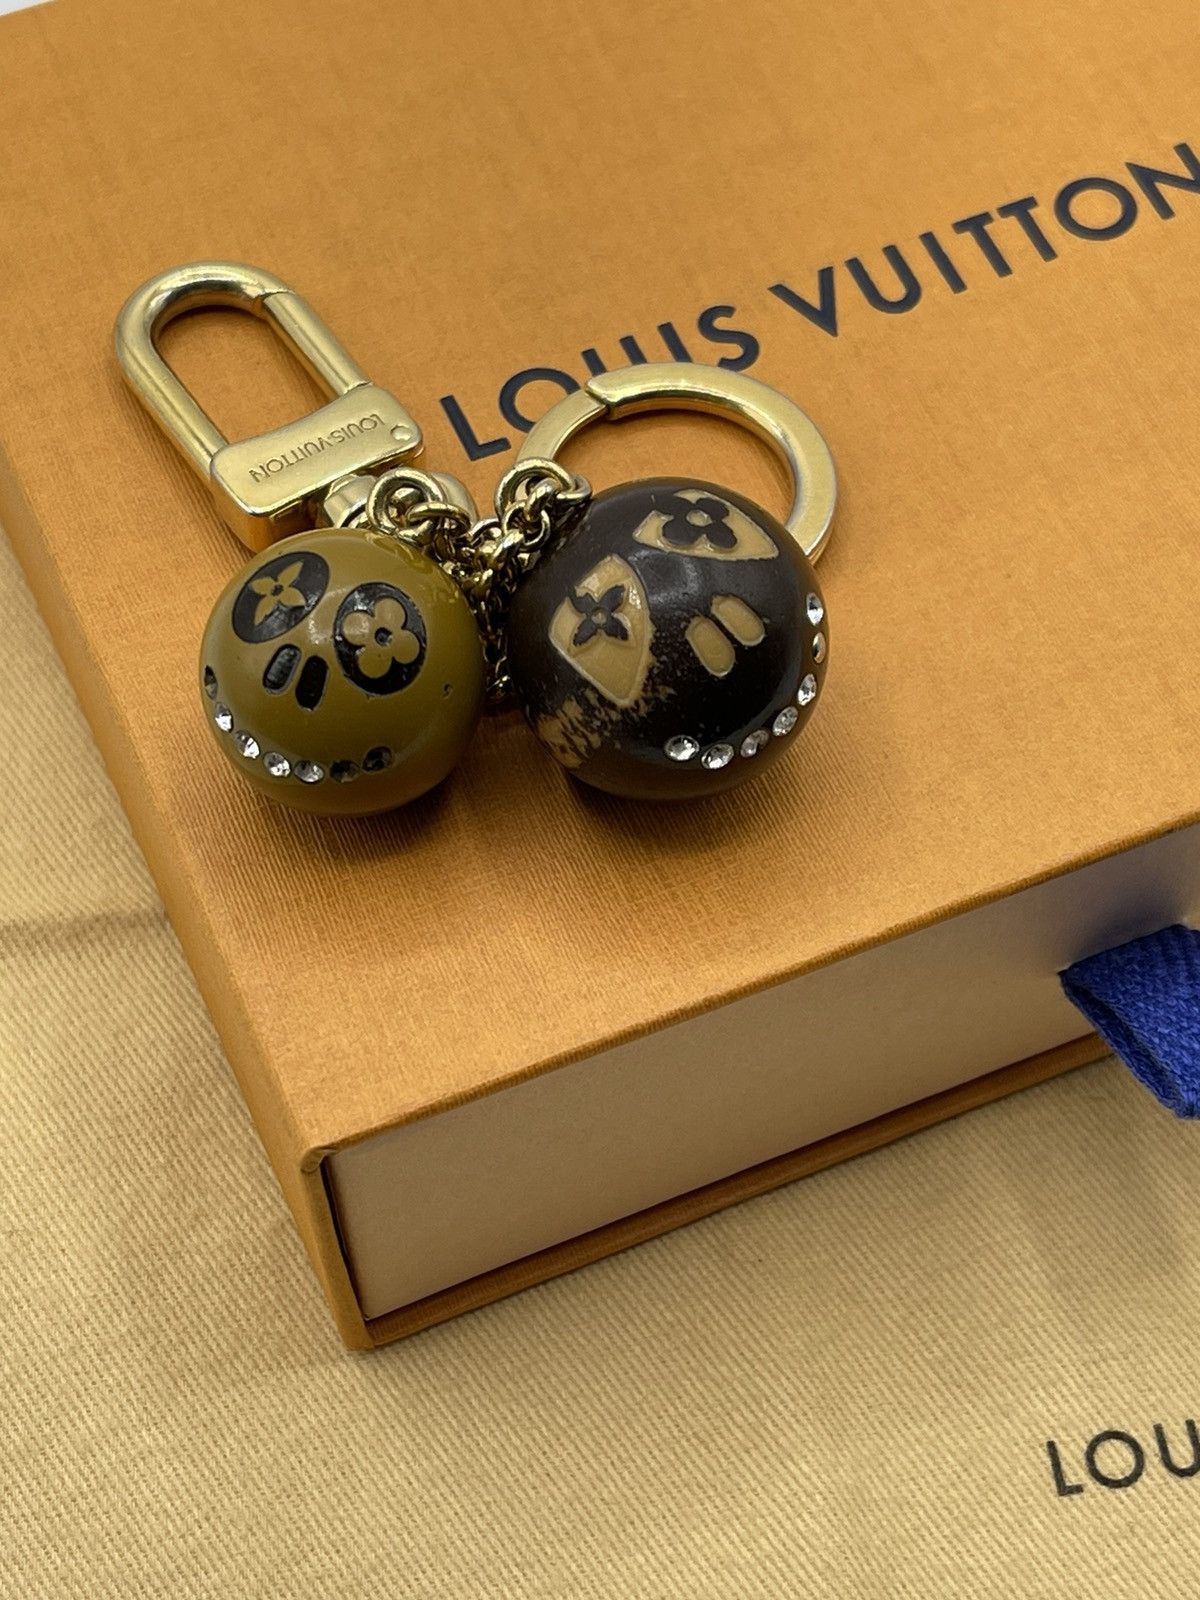 LOUIS VUITTON Bag charm Key chain holder ring Porto Cle chenne